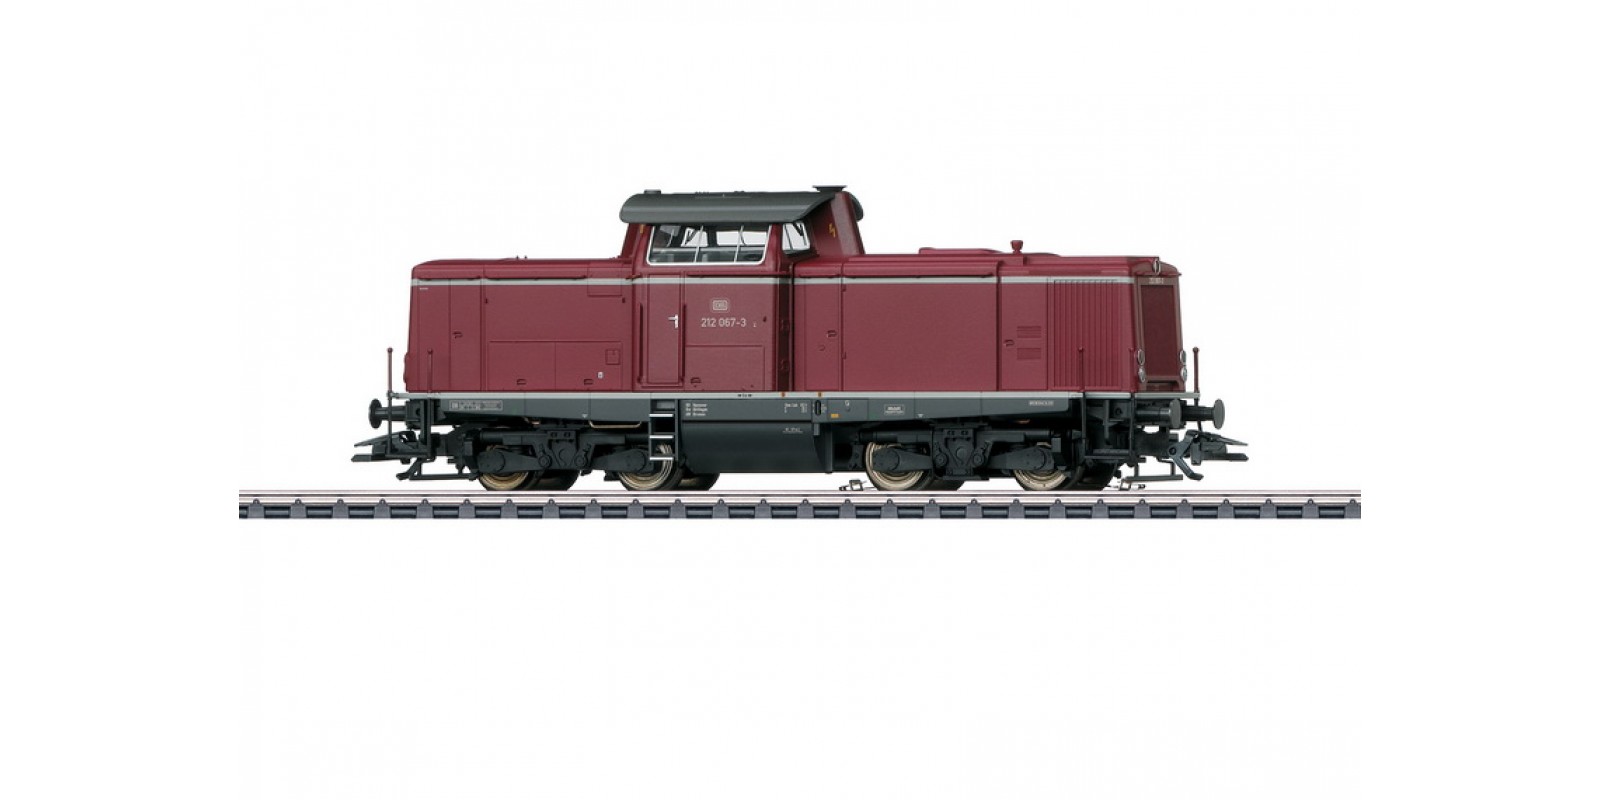 37009 Class 212 Diesel Locomotive